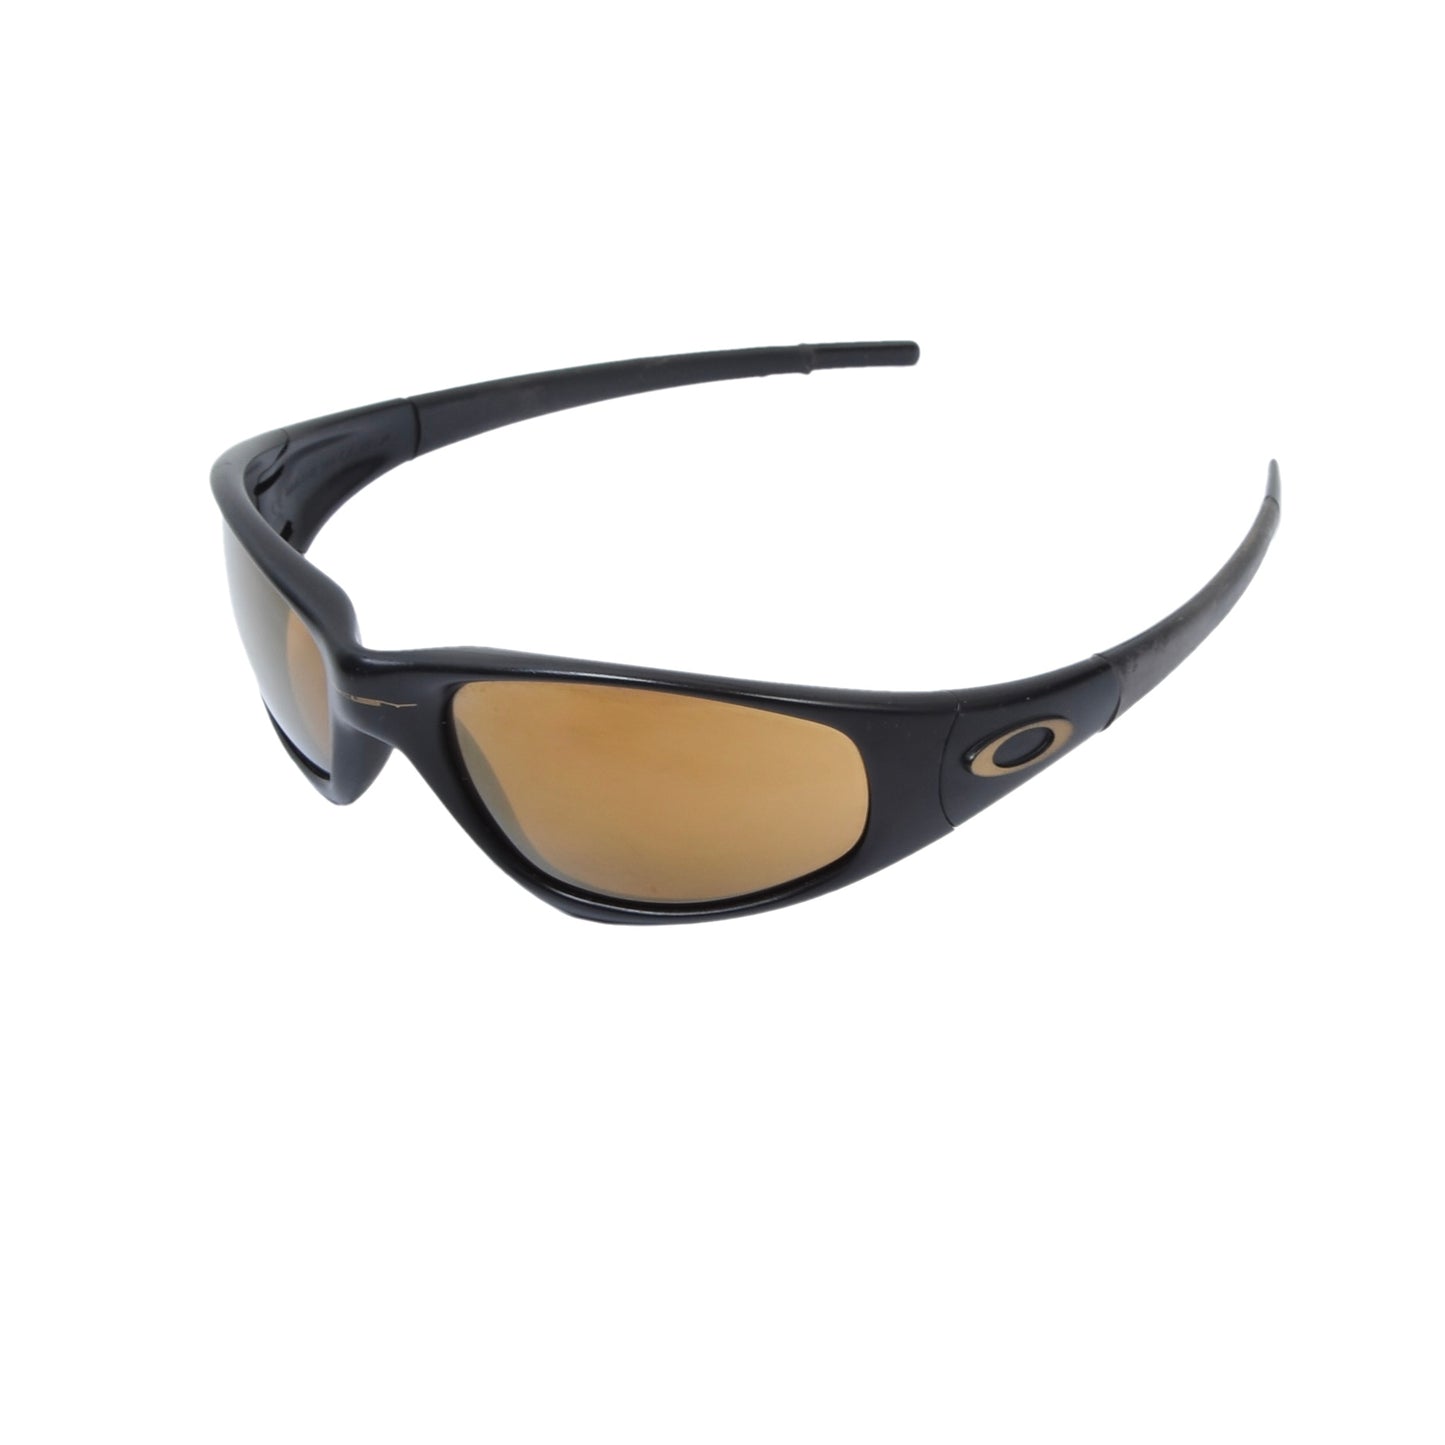 Oakley Gen 1 Straight Jacket Sunglasses with Box - Black/Gold Iridium